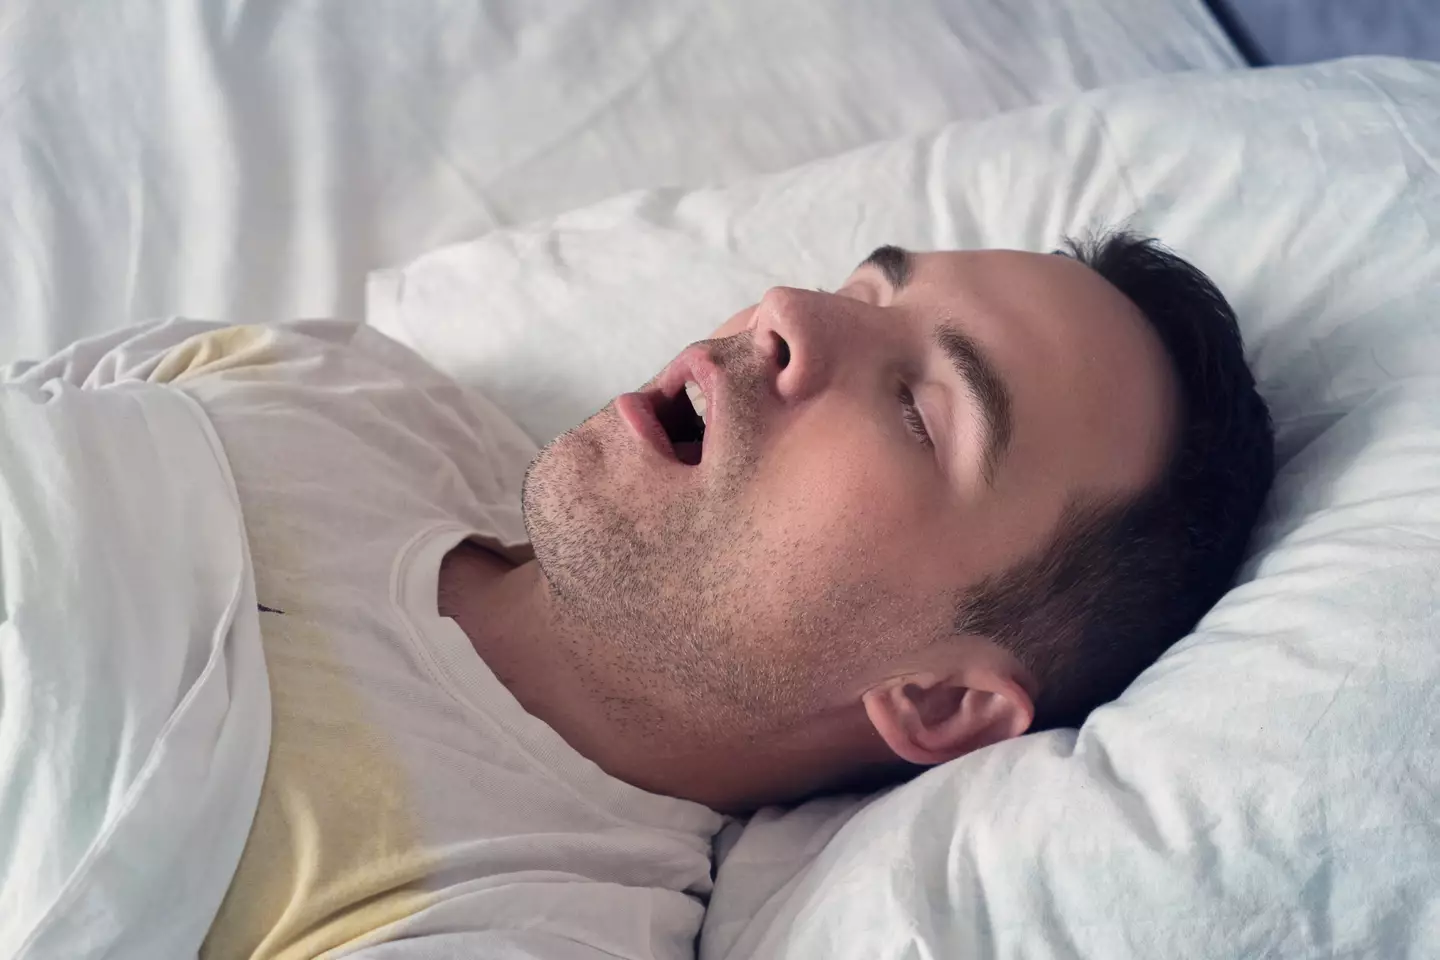 Bad snoring could be the sign of something worse like sleep apnoea.